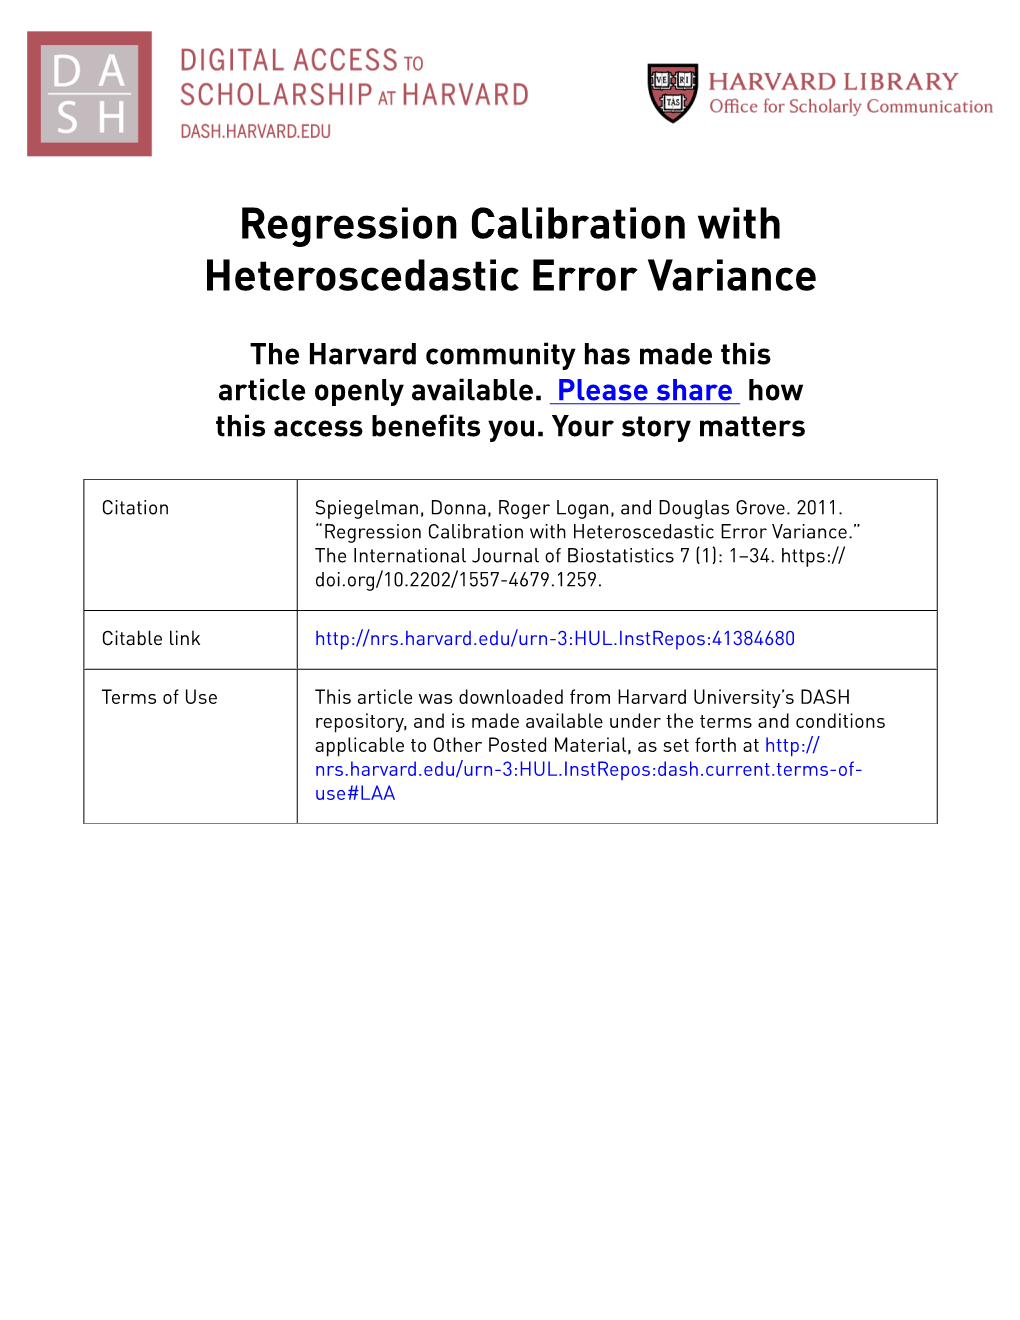 Regression Calibration with Heteroscedastic Error Variance